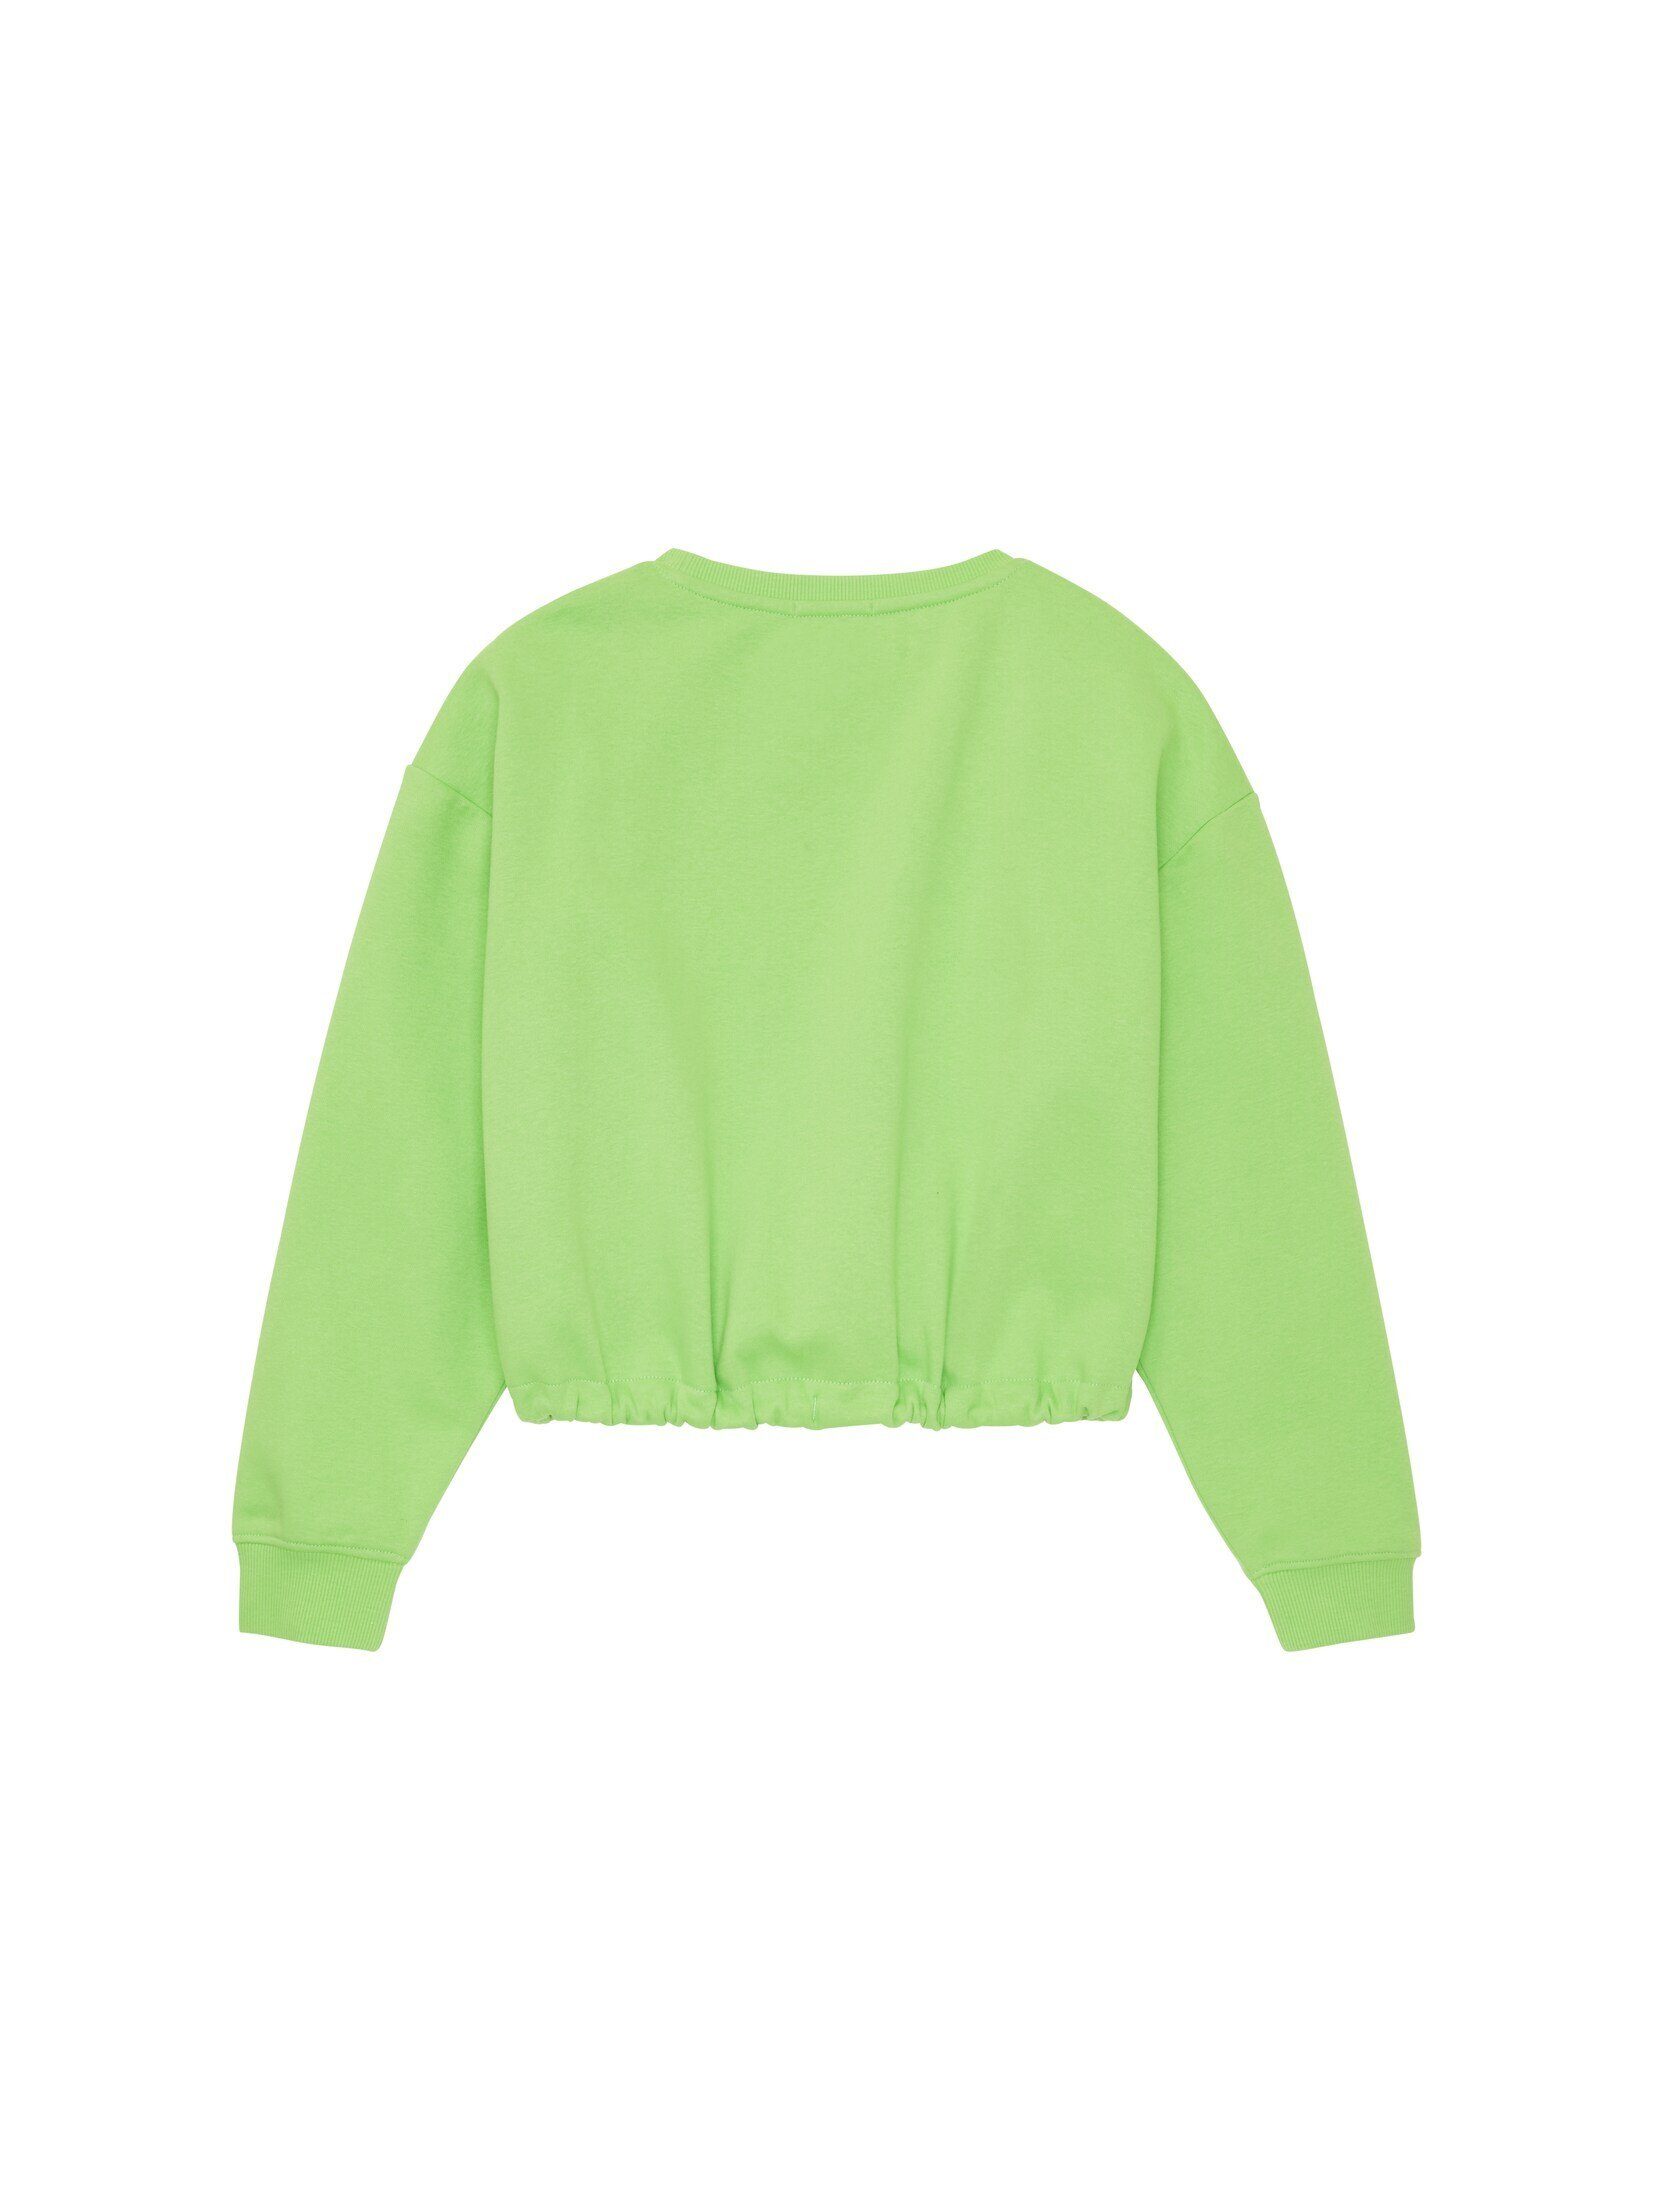 TOM TAILOR green Print lime Sweatshirt Cropped mit Sweatjacke liquid